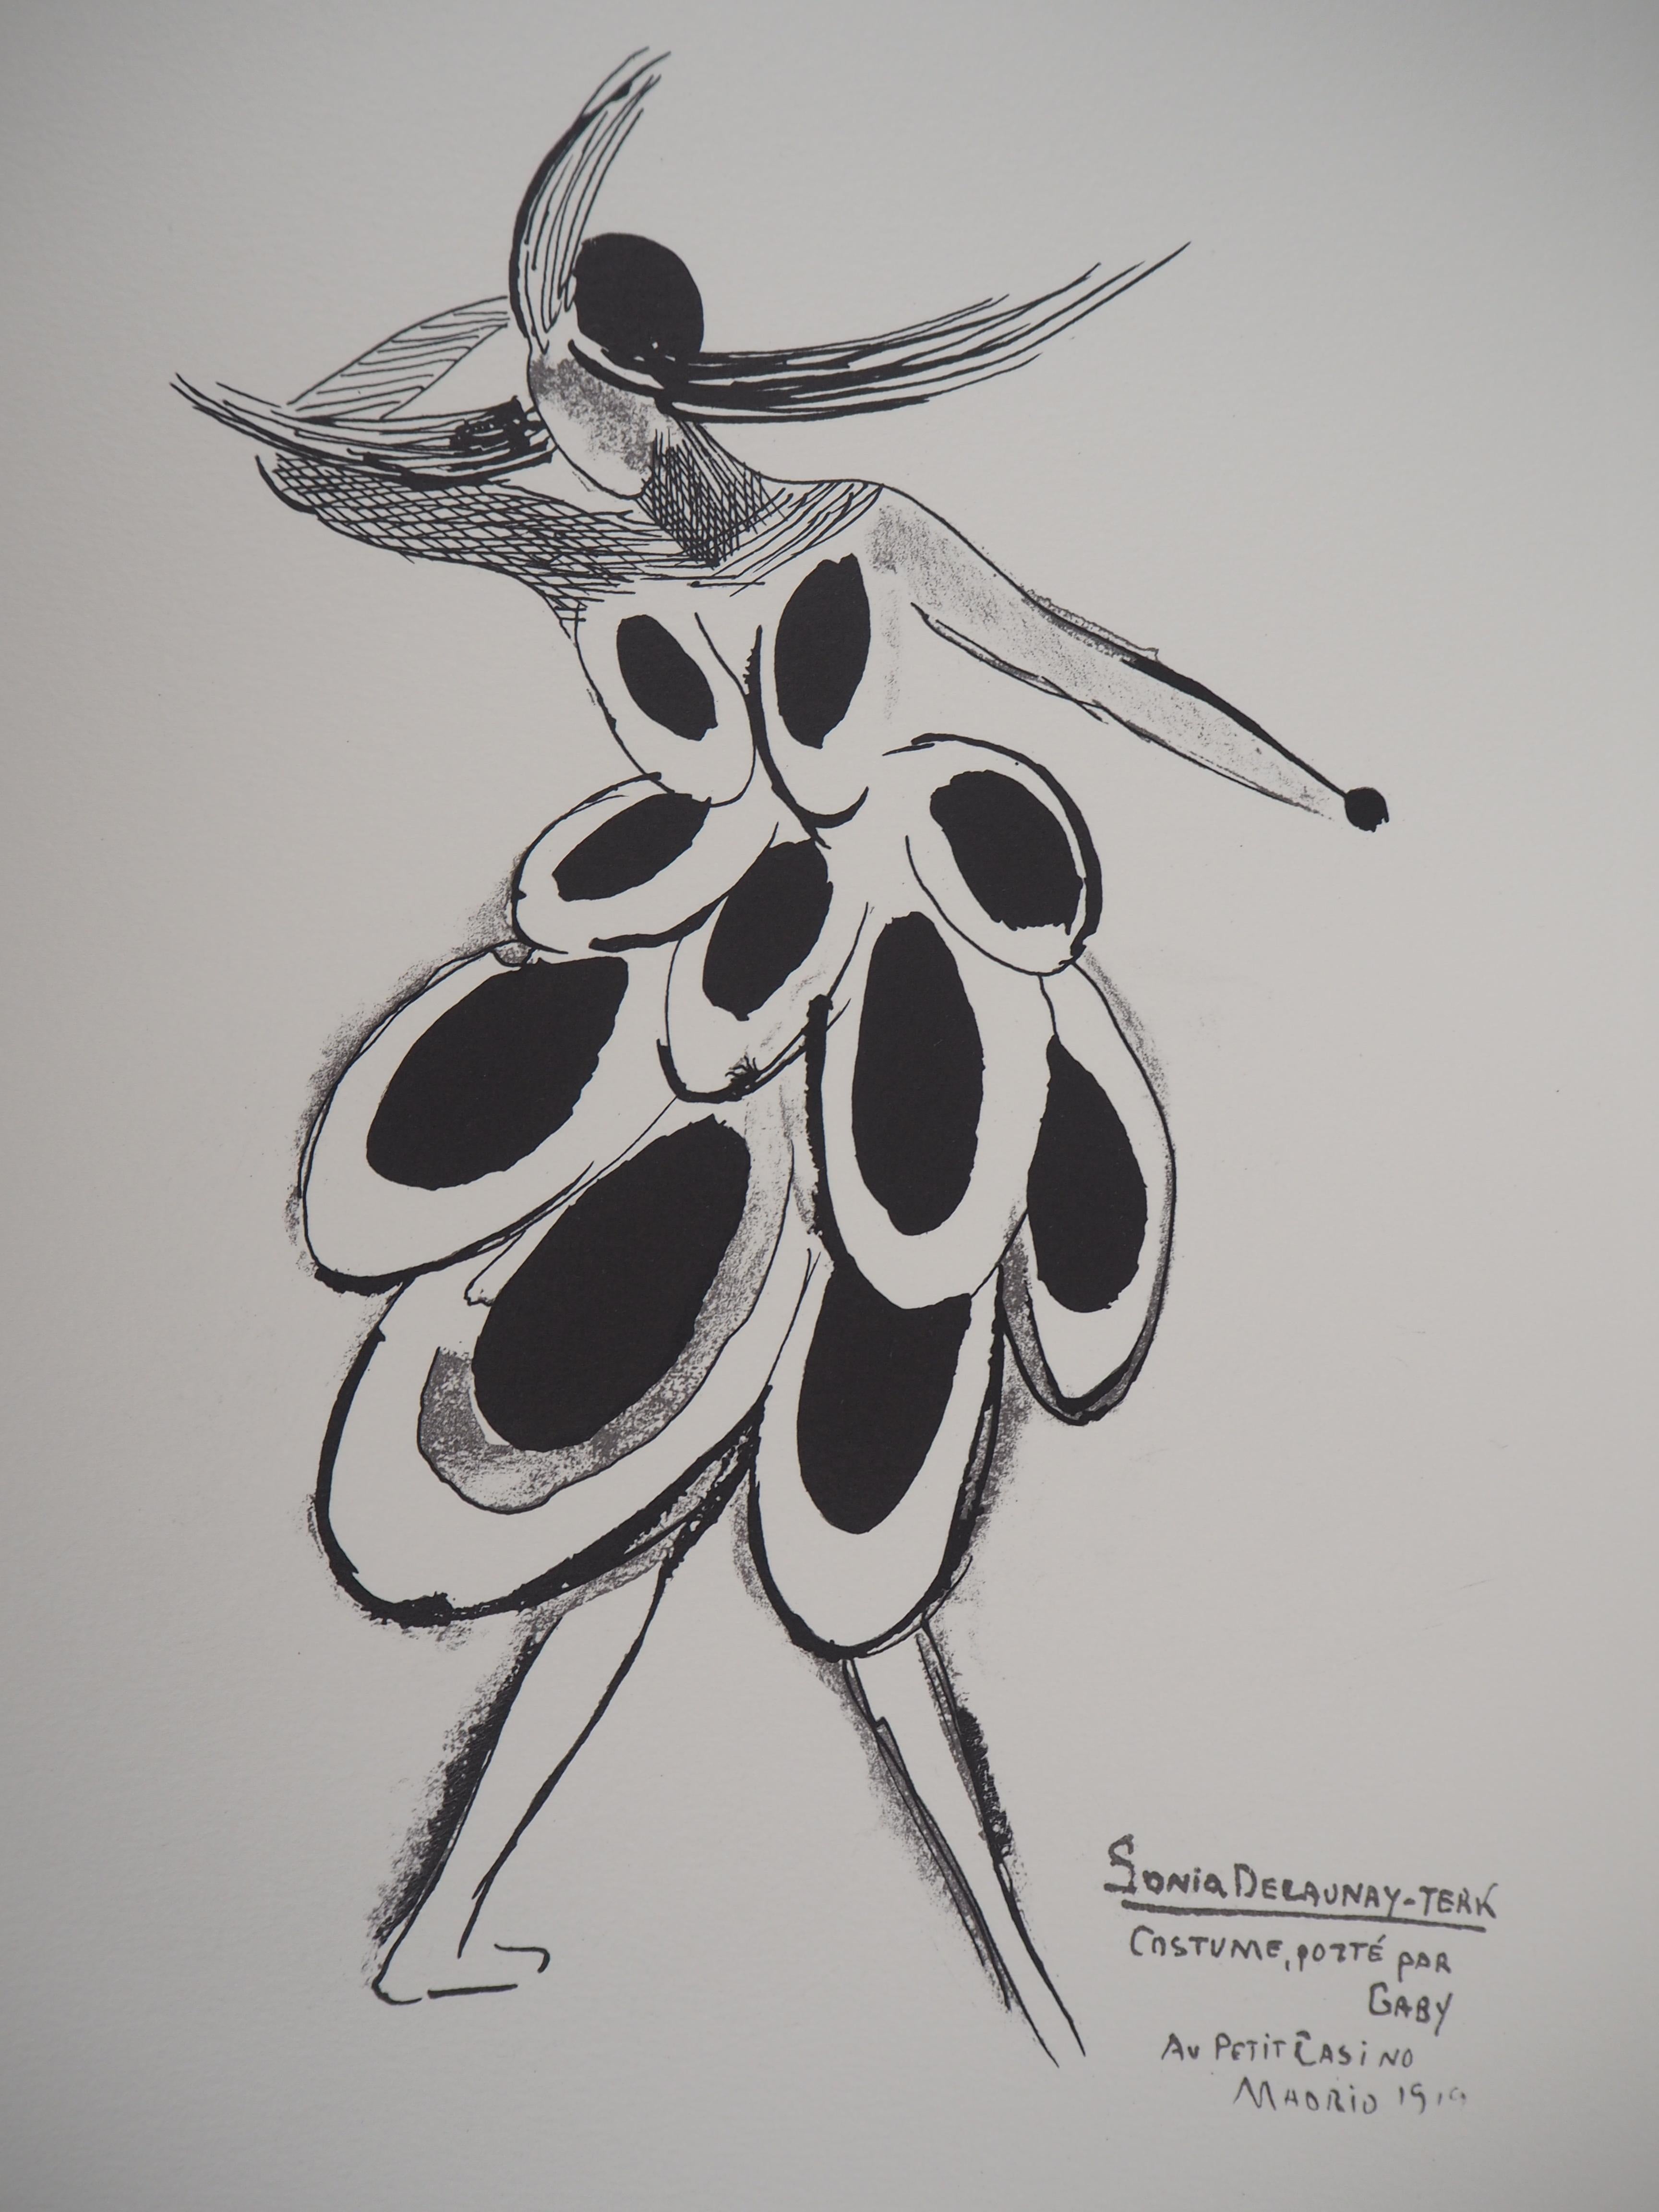 Espagne : Danseuse de flamenco - Lithographie (édition Artcurial) - Print de Sonia Delaunay